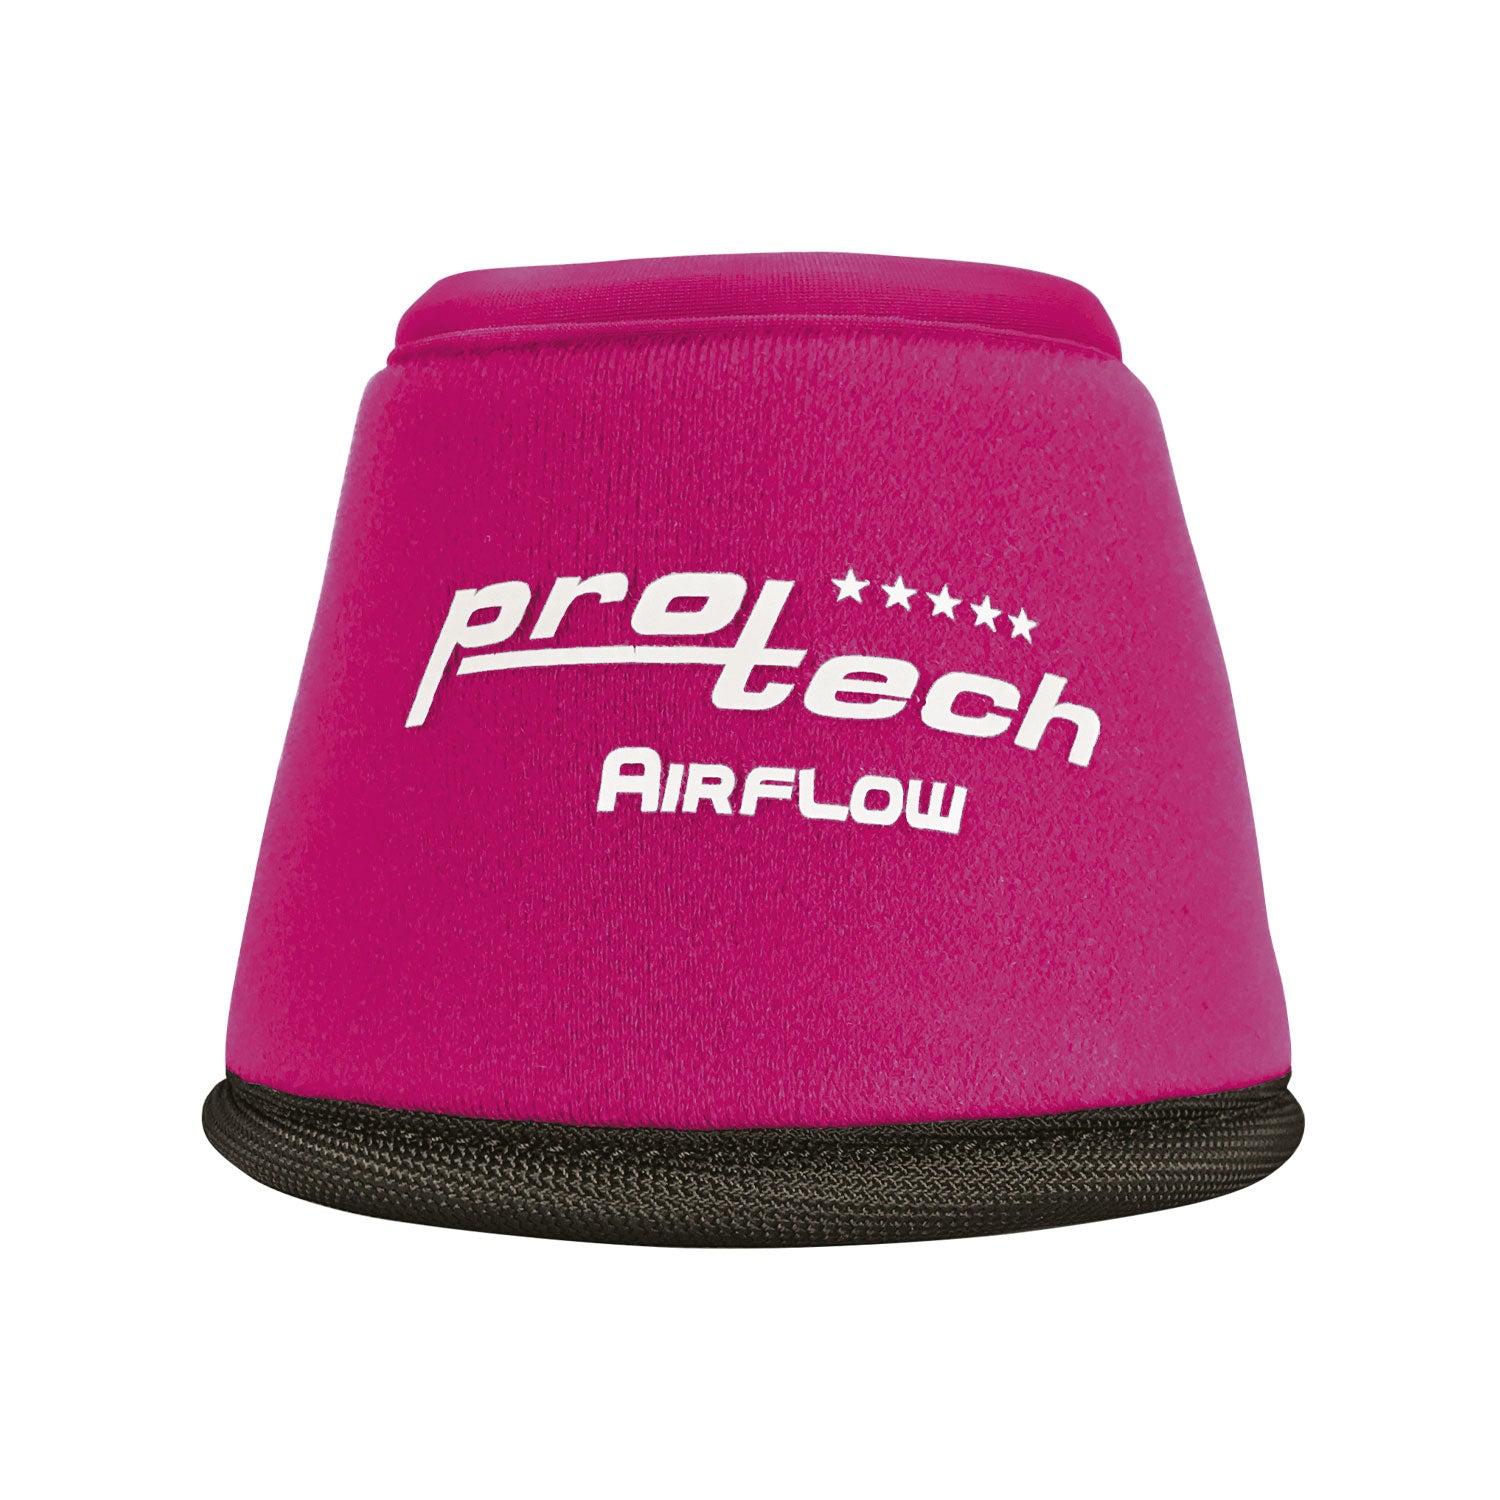 Paraglomi Performa Airflow in Neoprene Colored con chiusura in Velcro